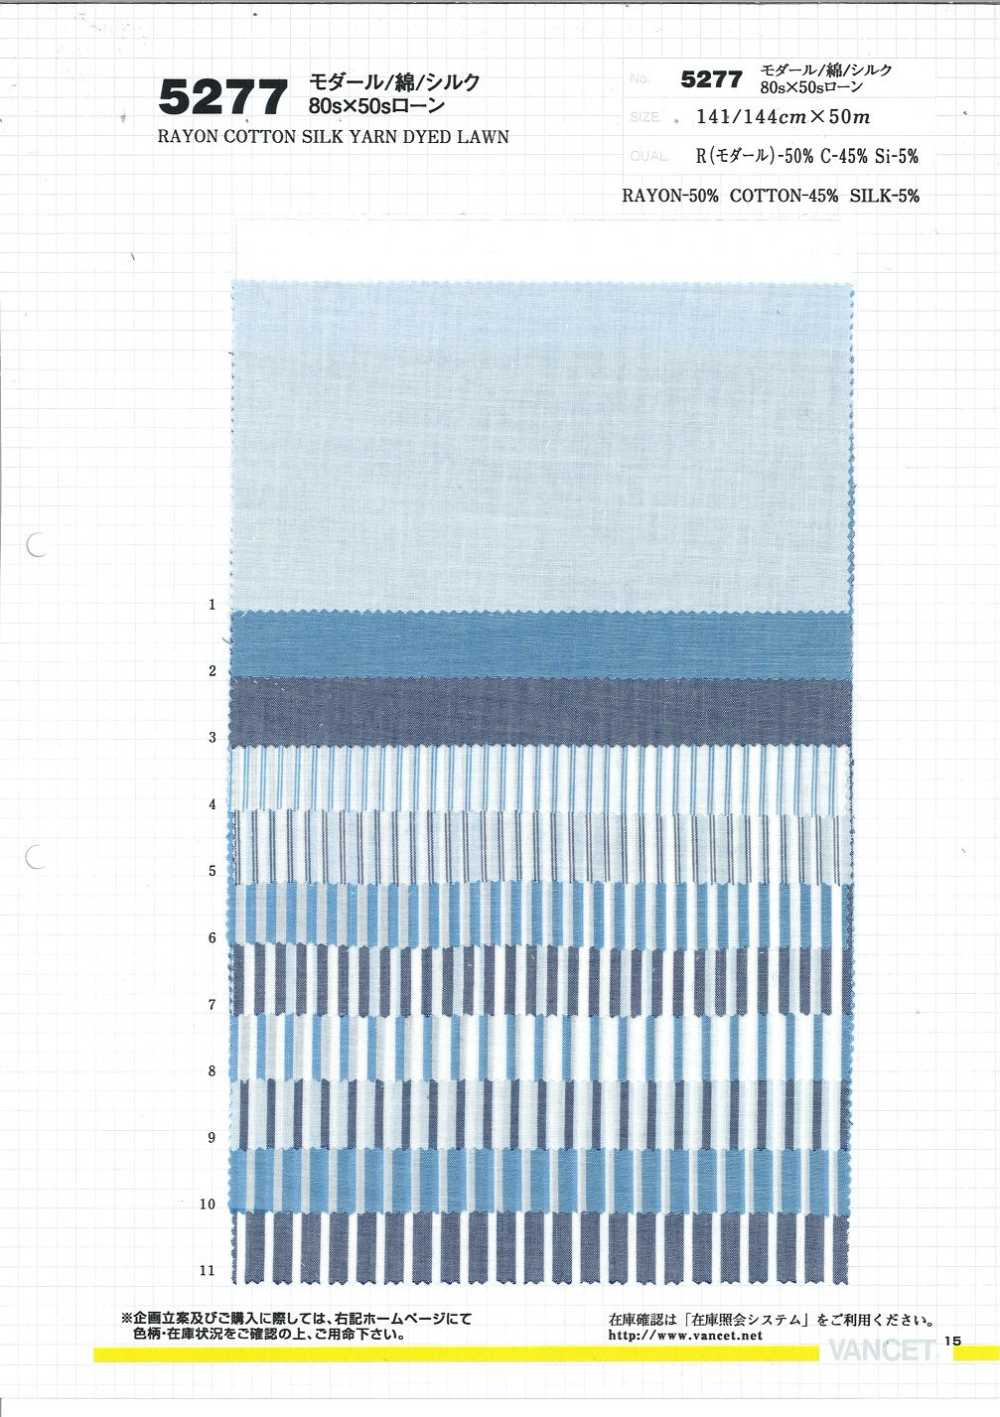 5277 Modal/Baumwolle/Seide 80 Single Thread X 50 Thread Rasen[Textilgewebe] VANCET